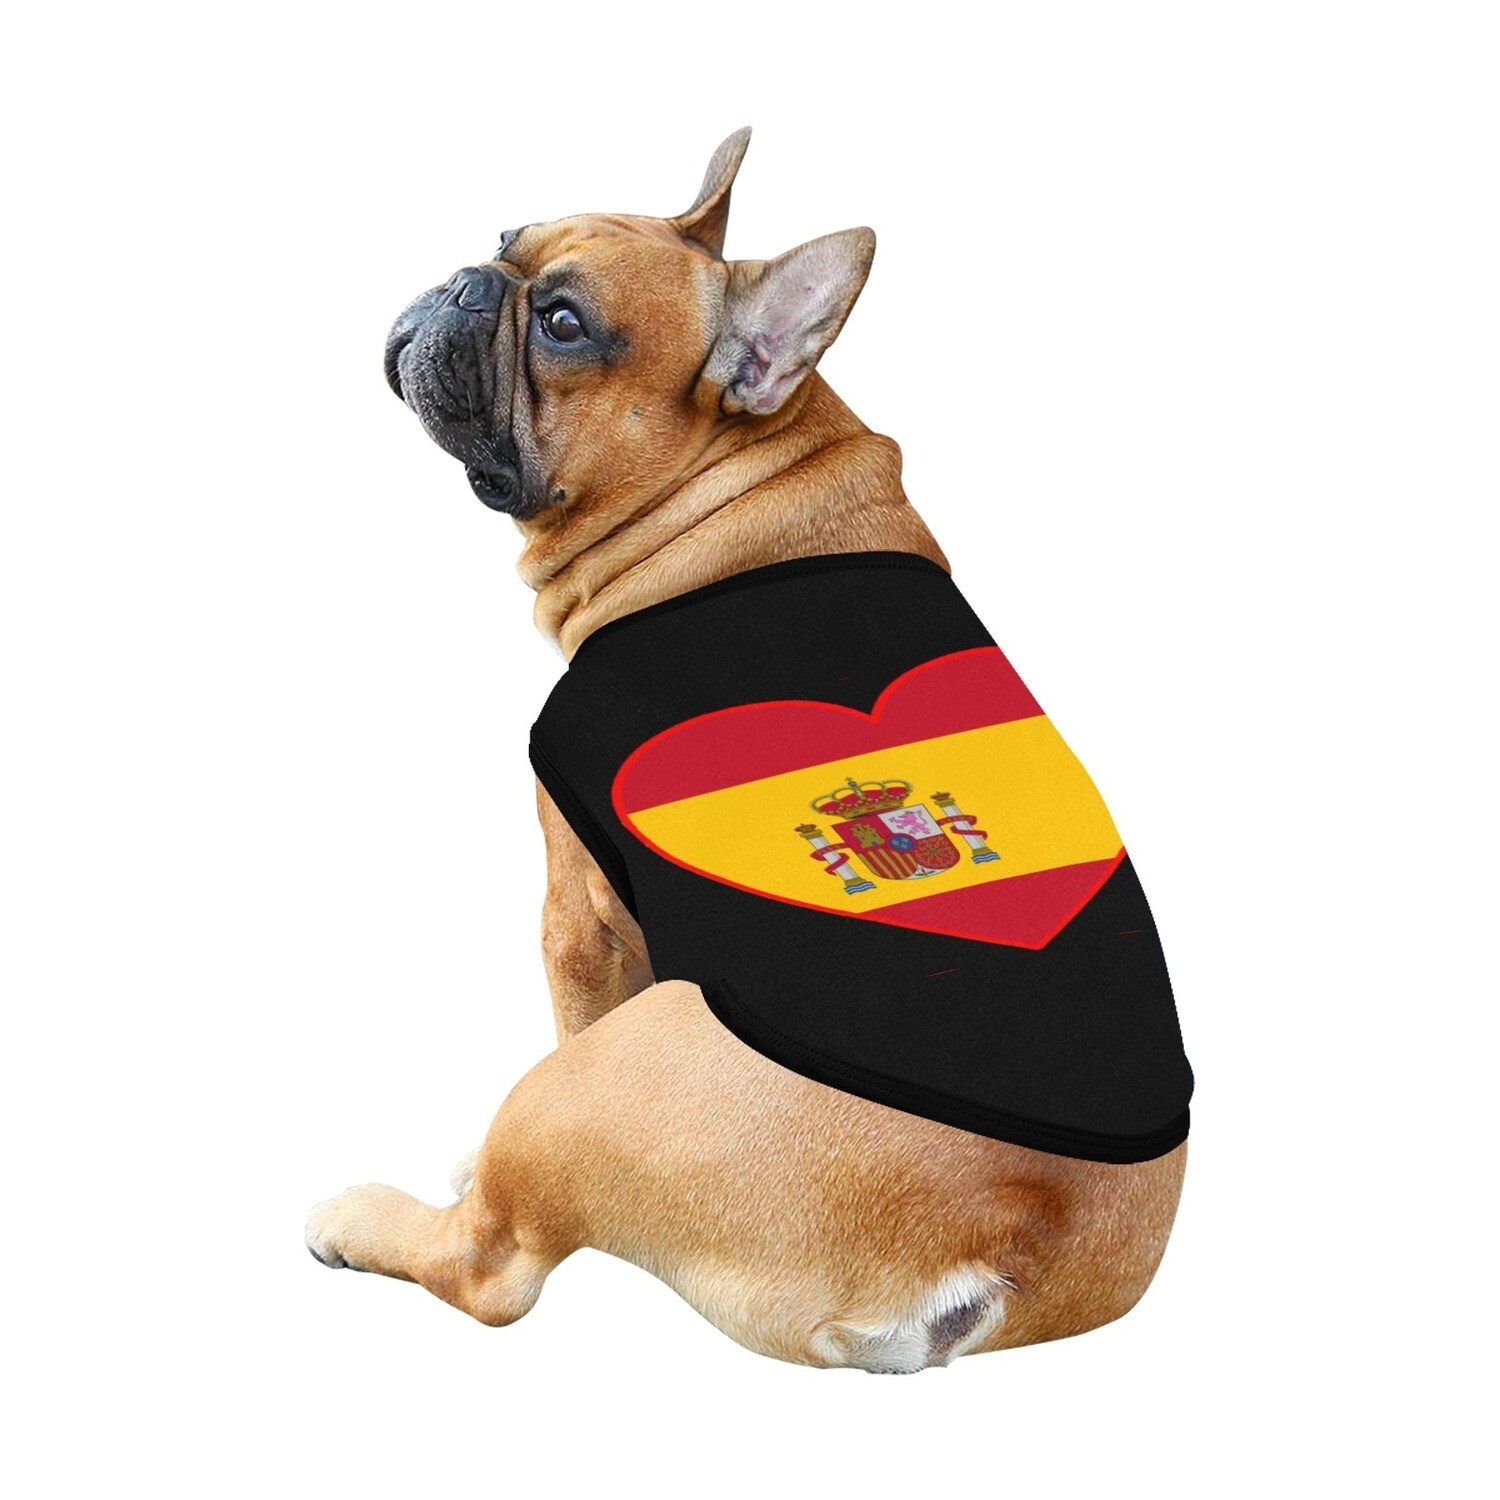 🐕🇪🇸I love Spain, Spanish flag, dog t-shirt, dog gift, dog tank top, dog shirt, dog clothes, gift, 7 sizes XS to 3XL, heart shape, black